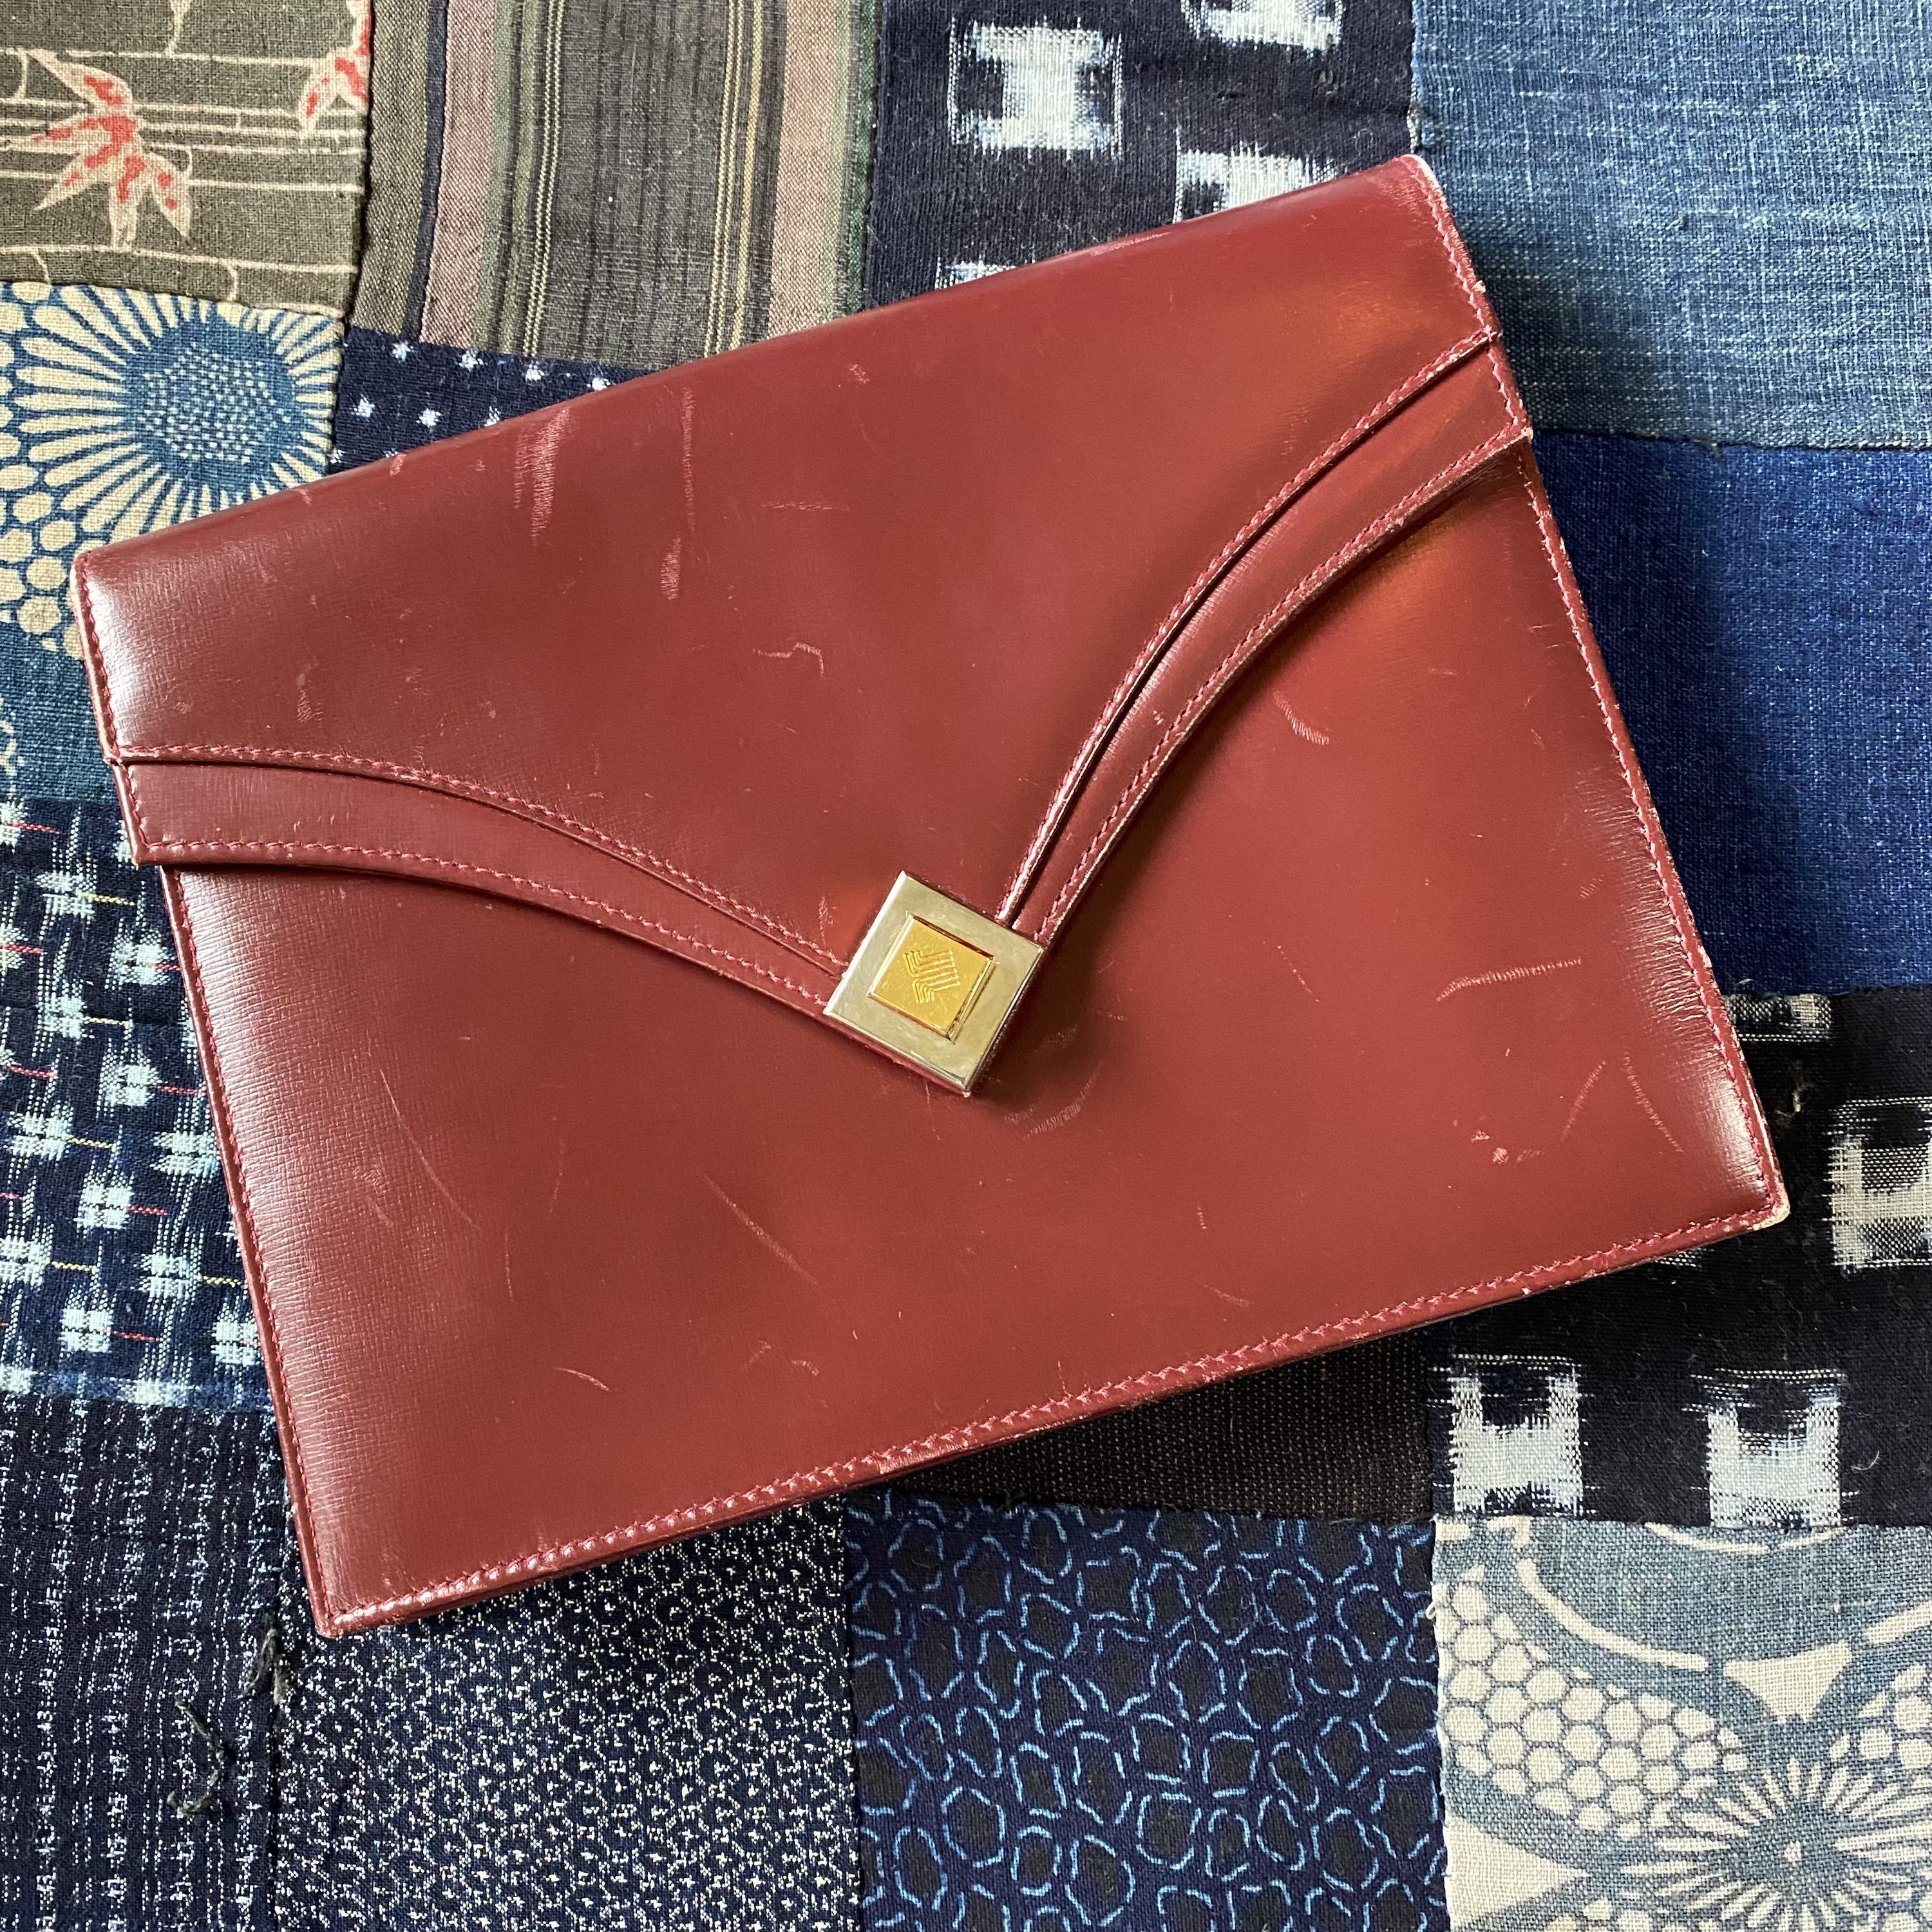 Authentic LAUNER shoulder clutch bag crossbody leather British